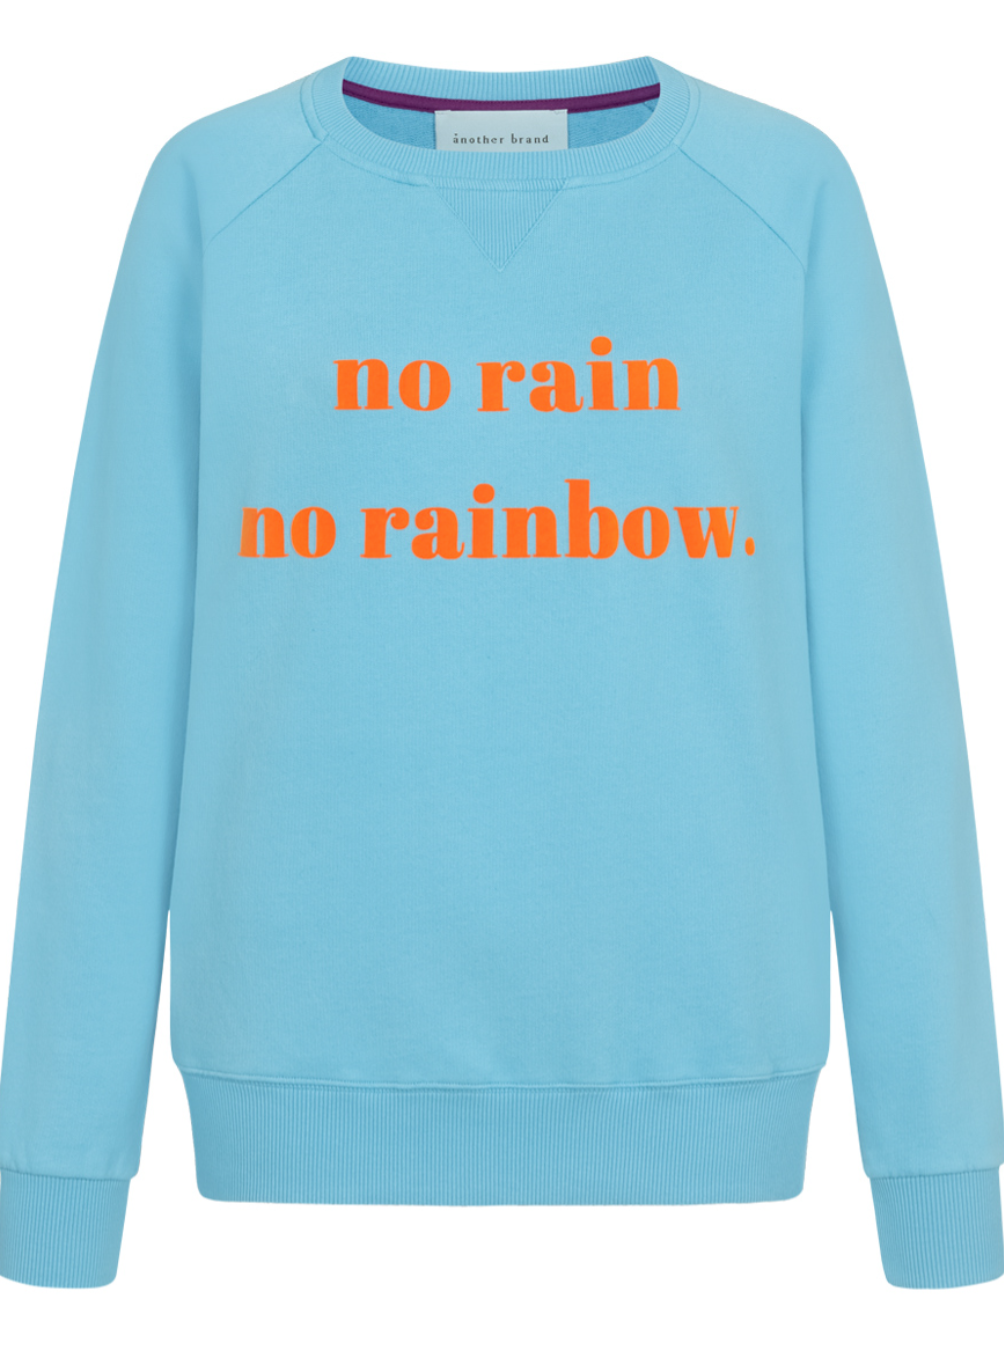 Sweatshirt no rain no rainbow türkis - another brand